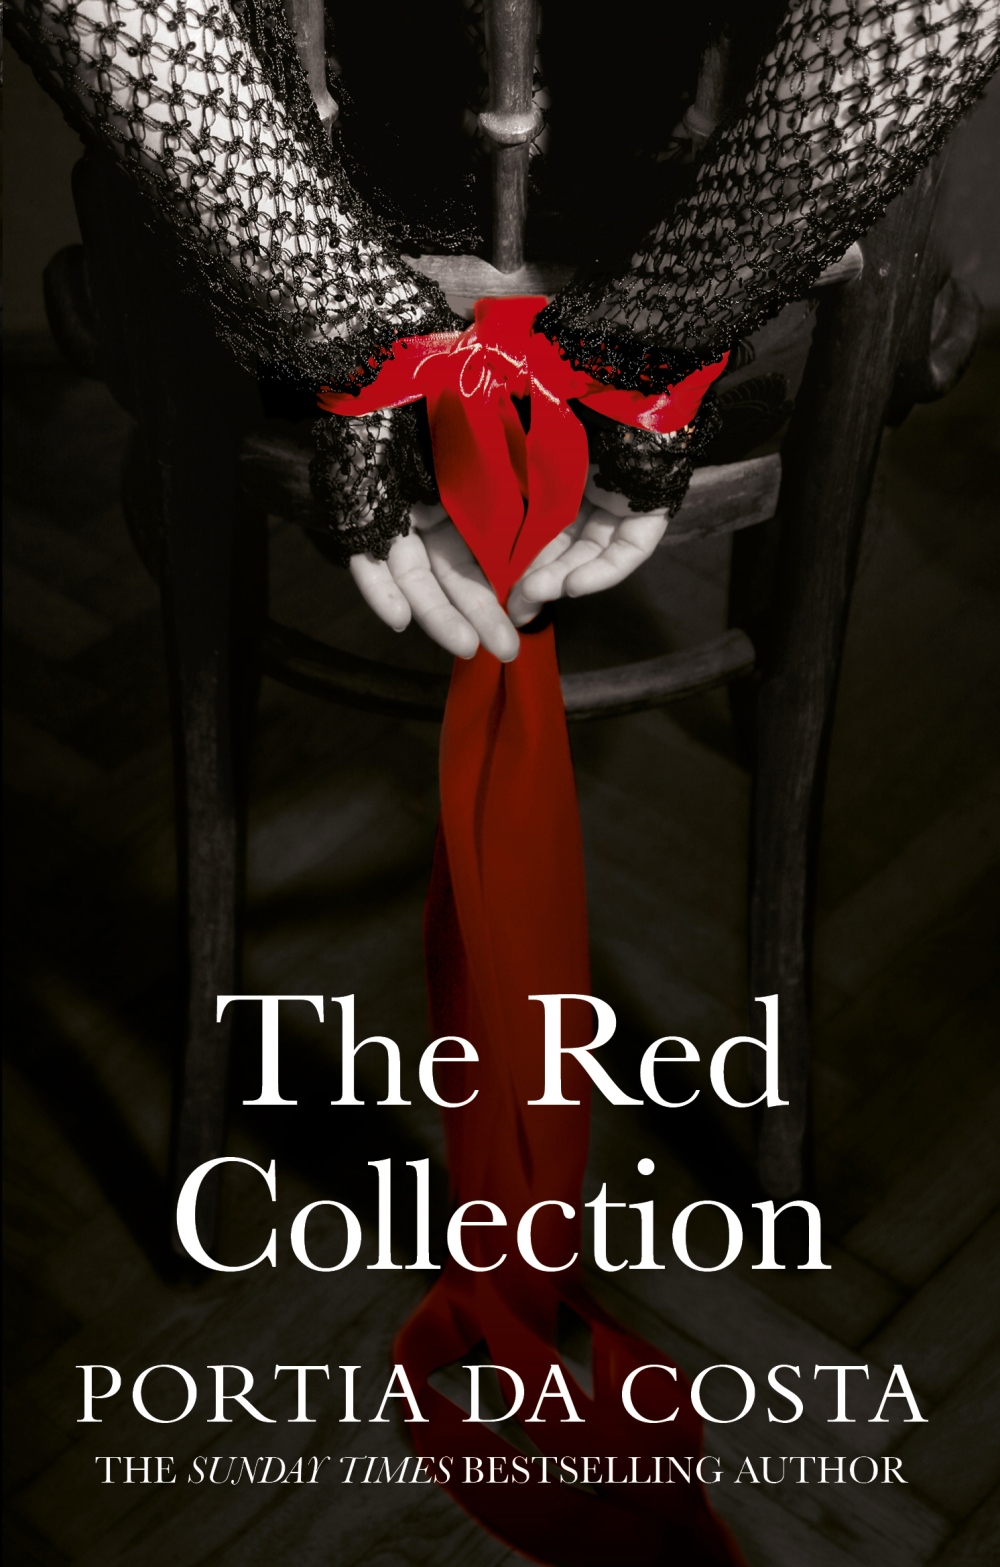 The Red Collection by Portia Da Costa